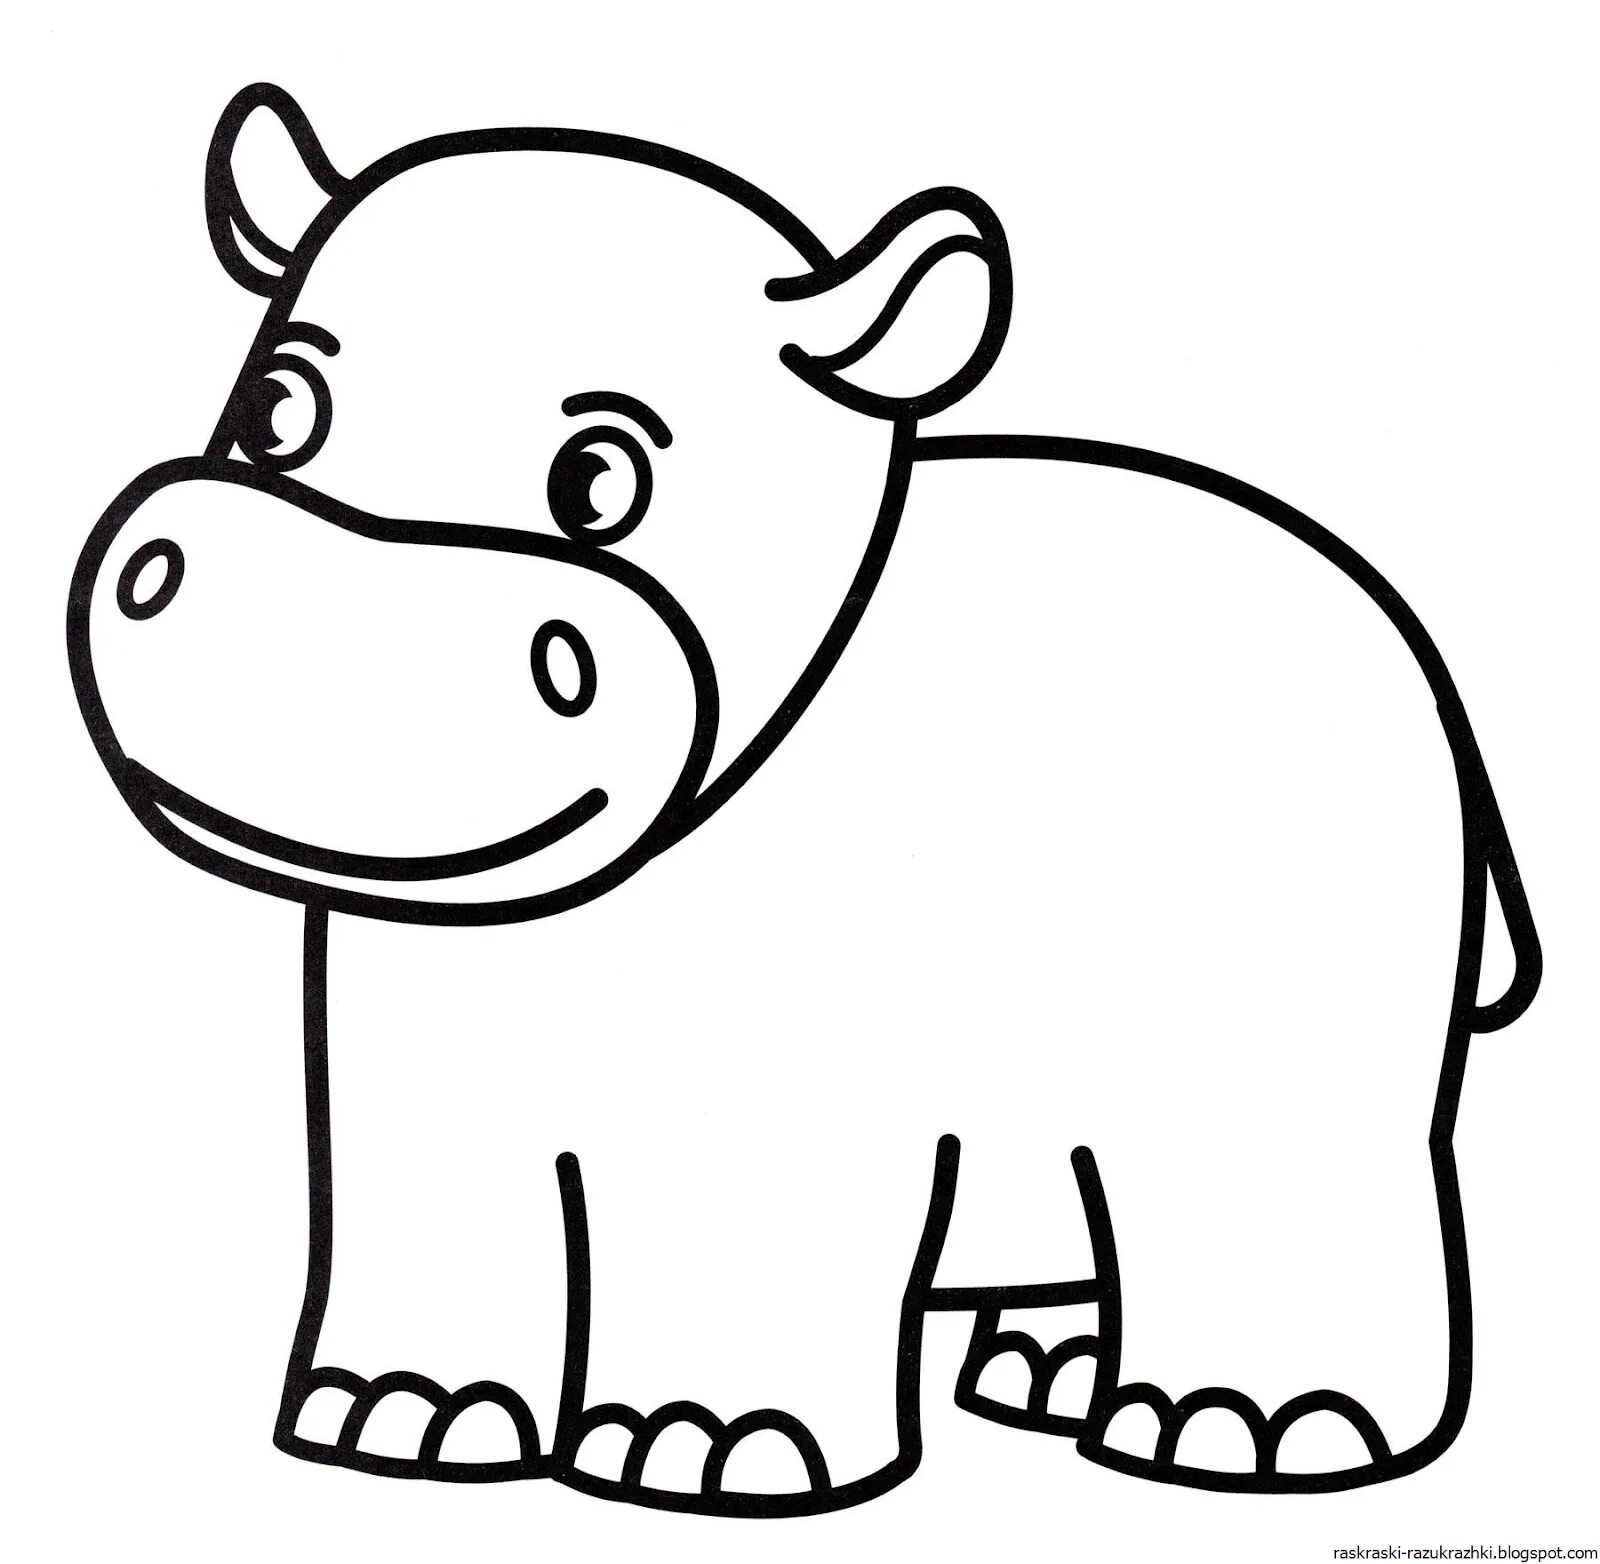 Hippopotamus for children 3 4 years old #20